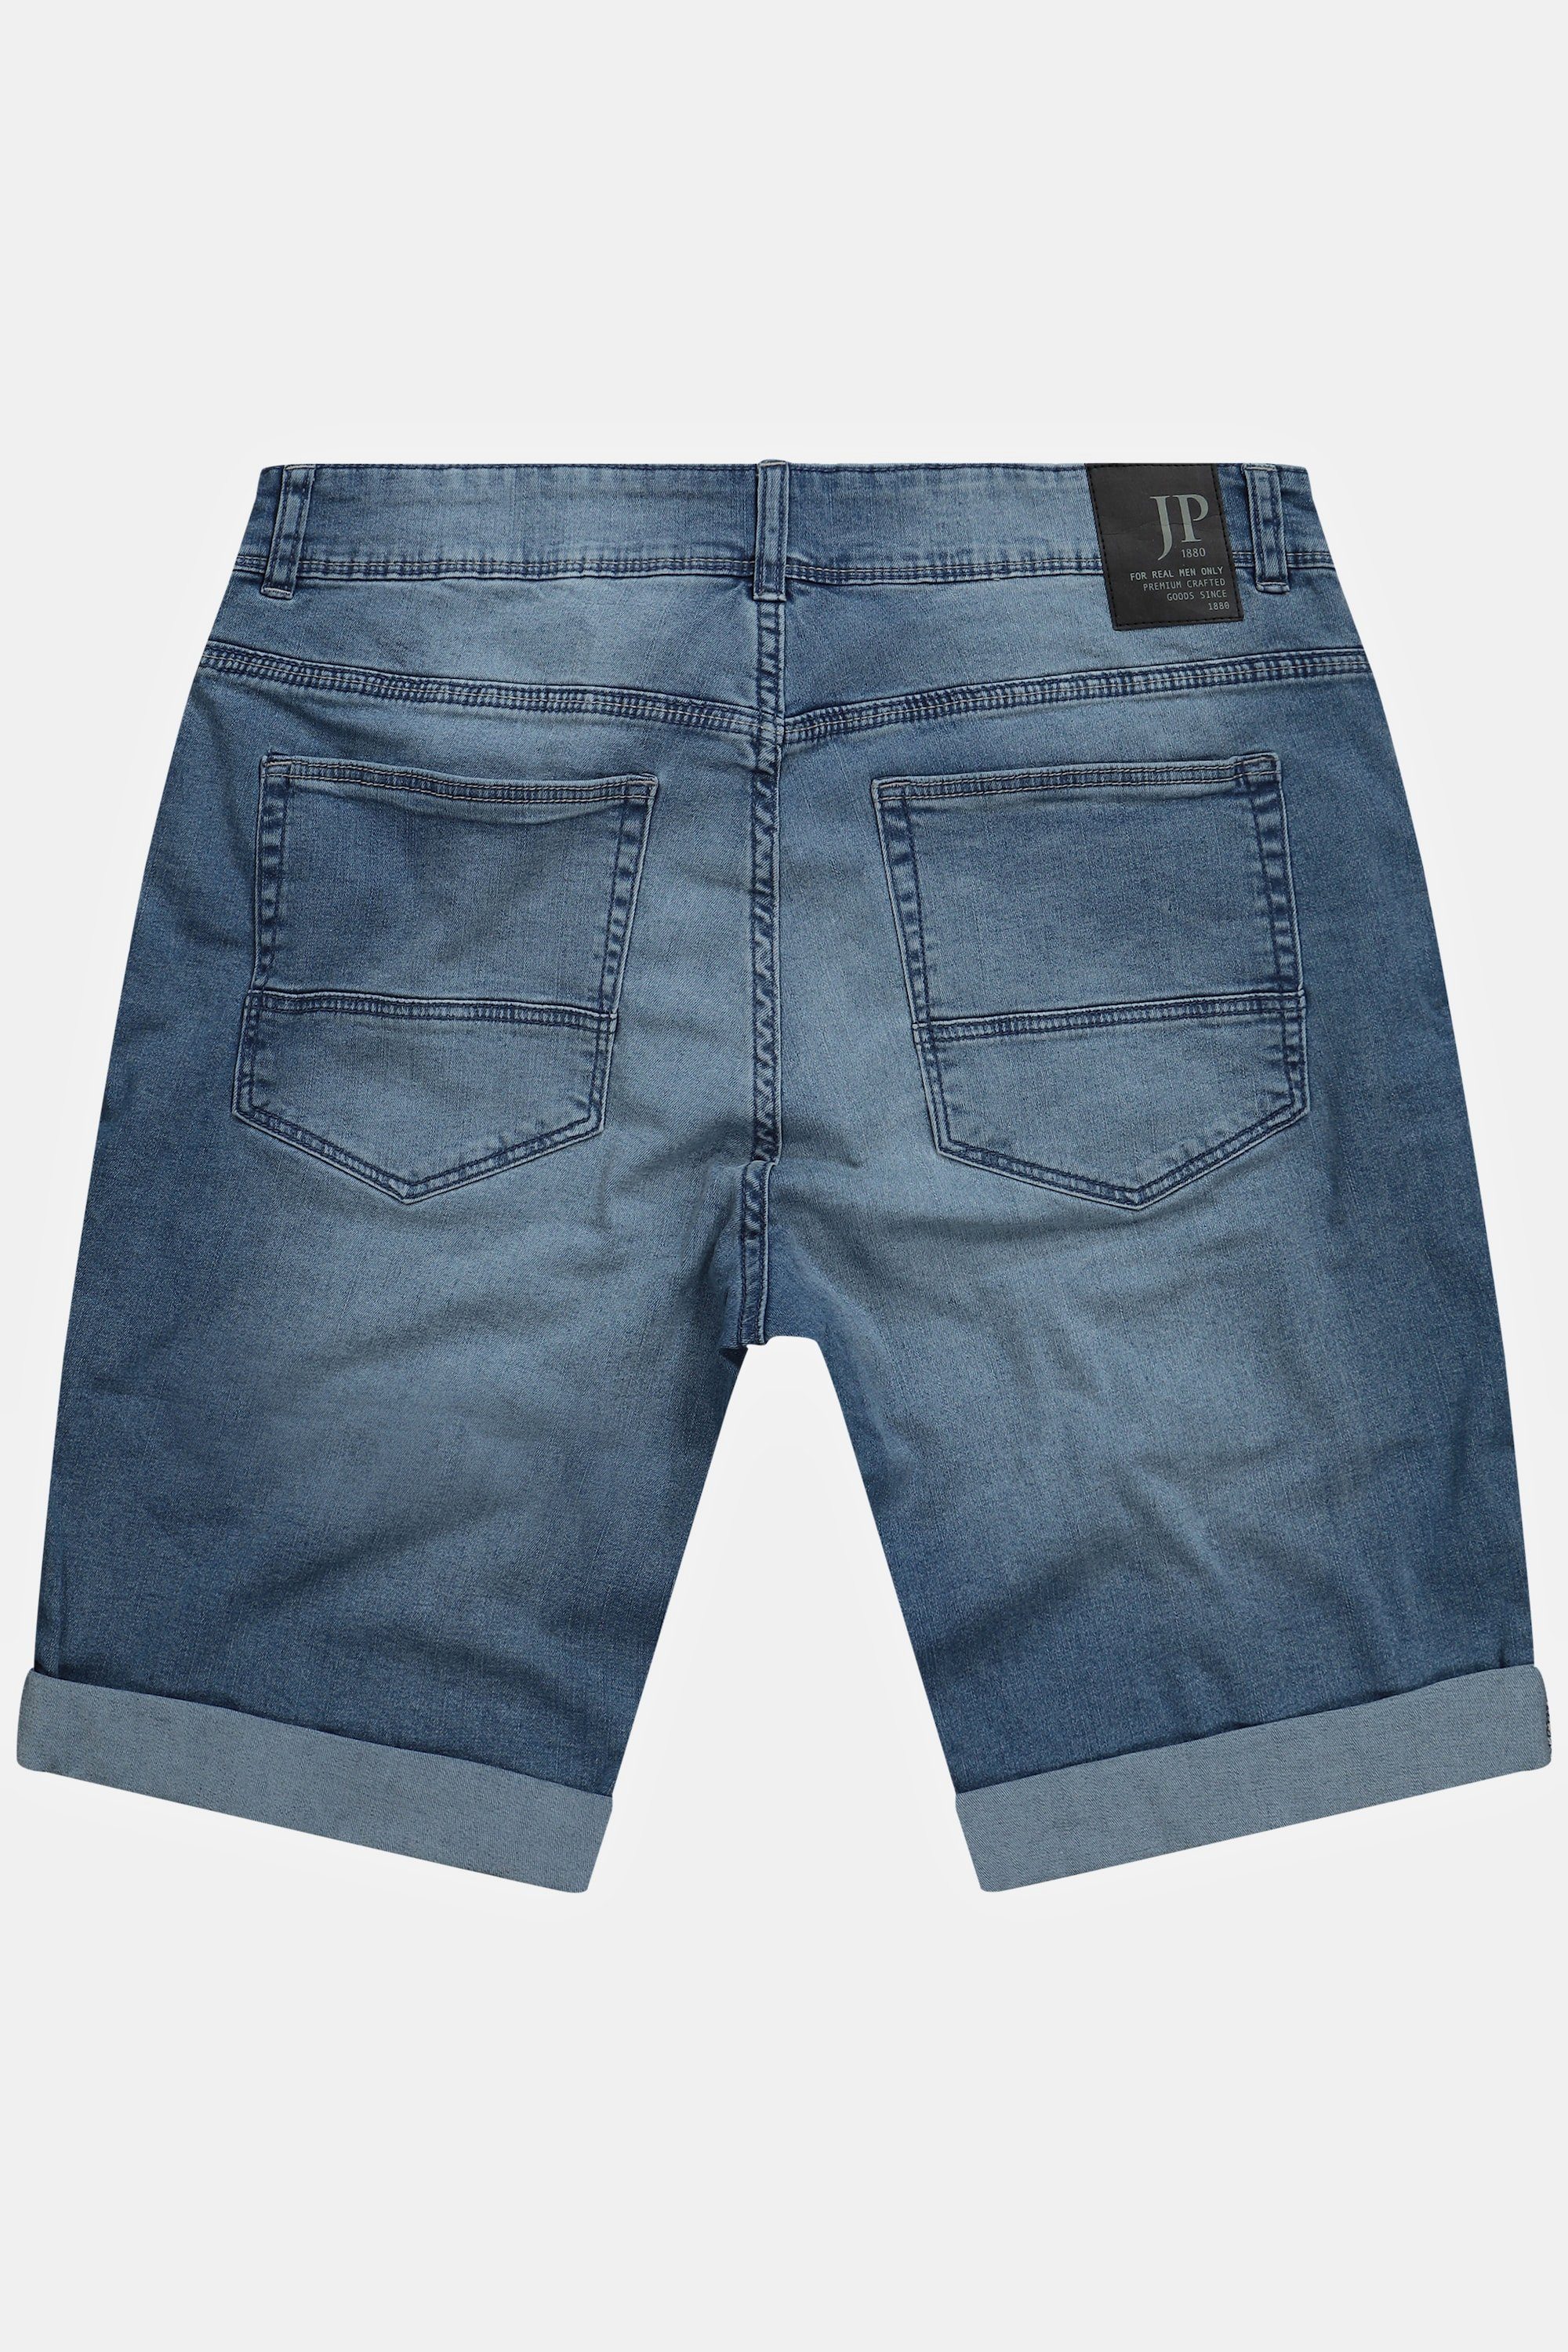 Lightweight-Jeansbermuda blue denim Regular JP1880 5-Pocket Fit Jeansbermudas